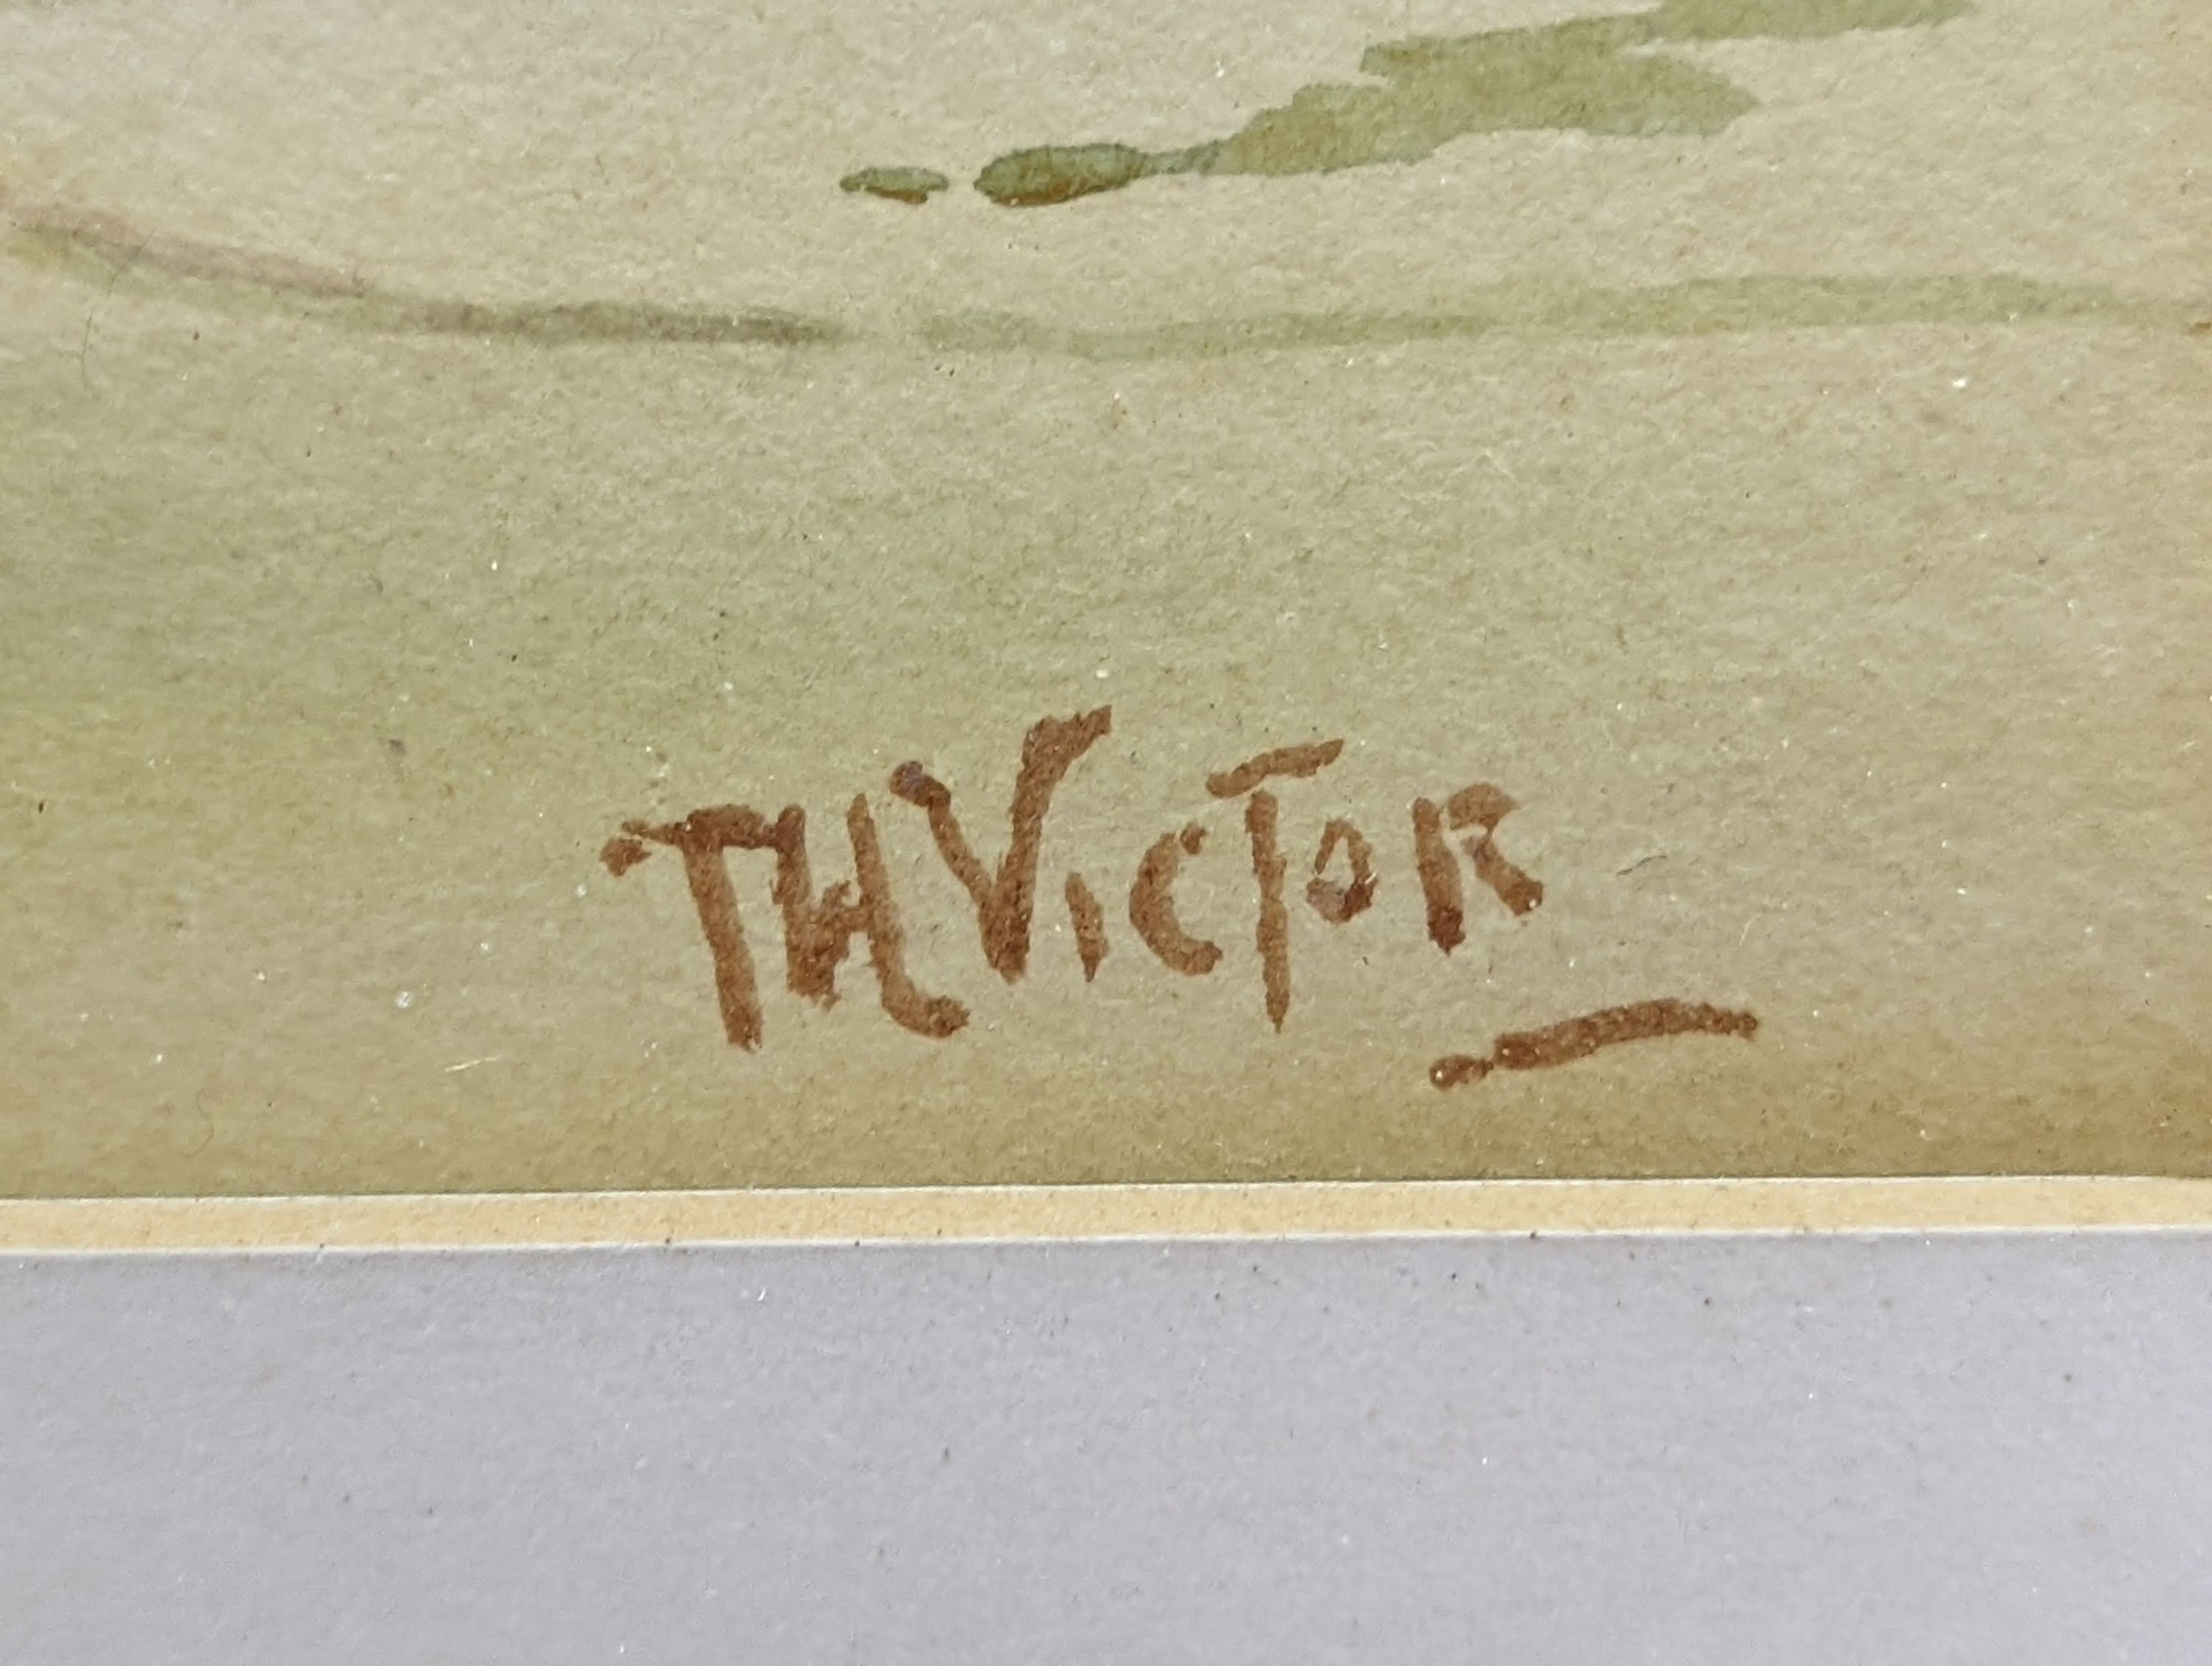 Thomas Herbert Victor (1894-1980), watercolour, St Michael's Mount, signed, 21 x 27cm